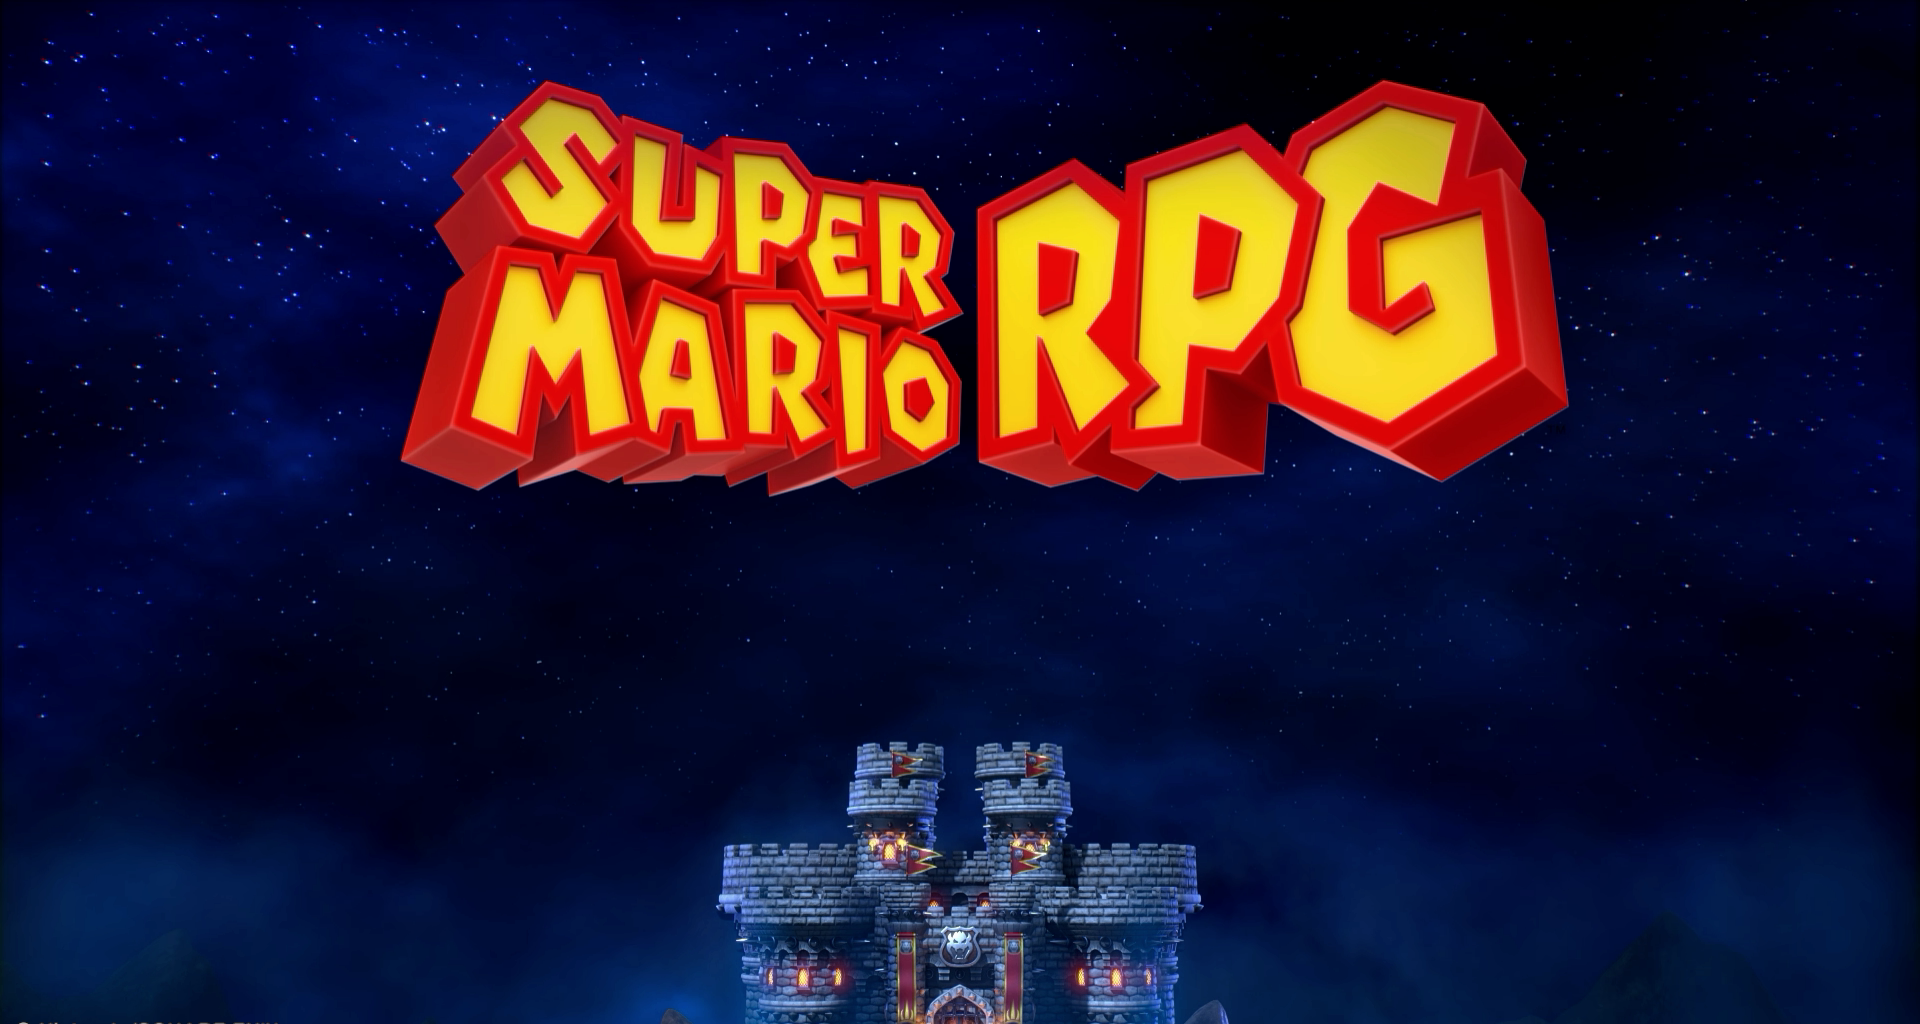 Super Mario RPG remake - everything we know